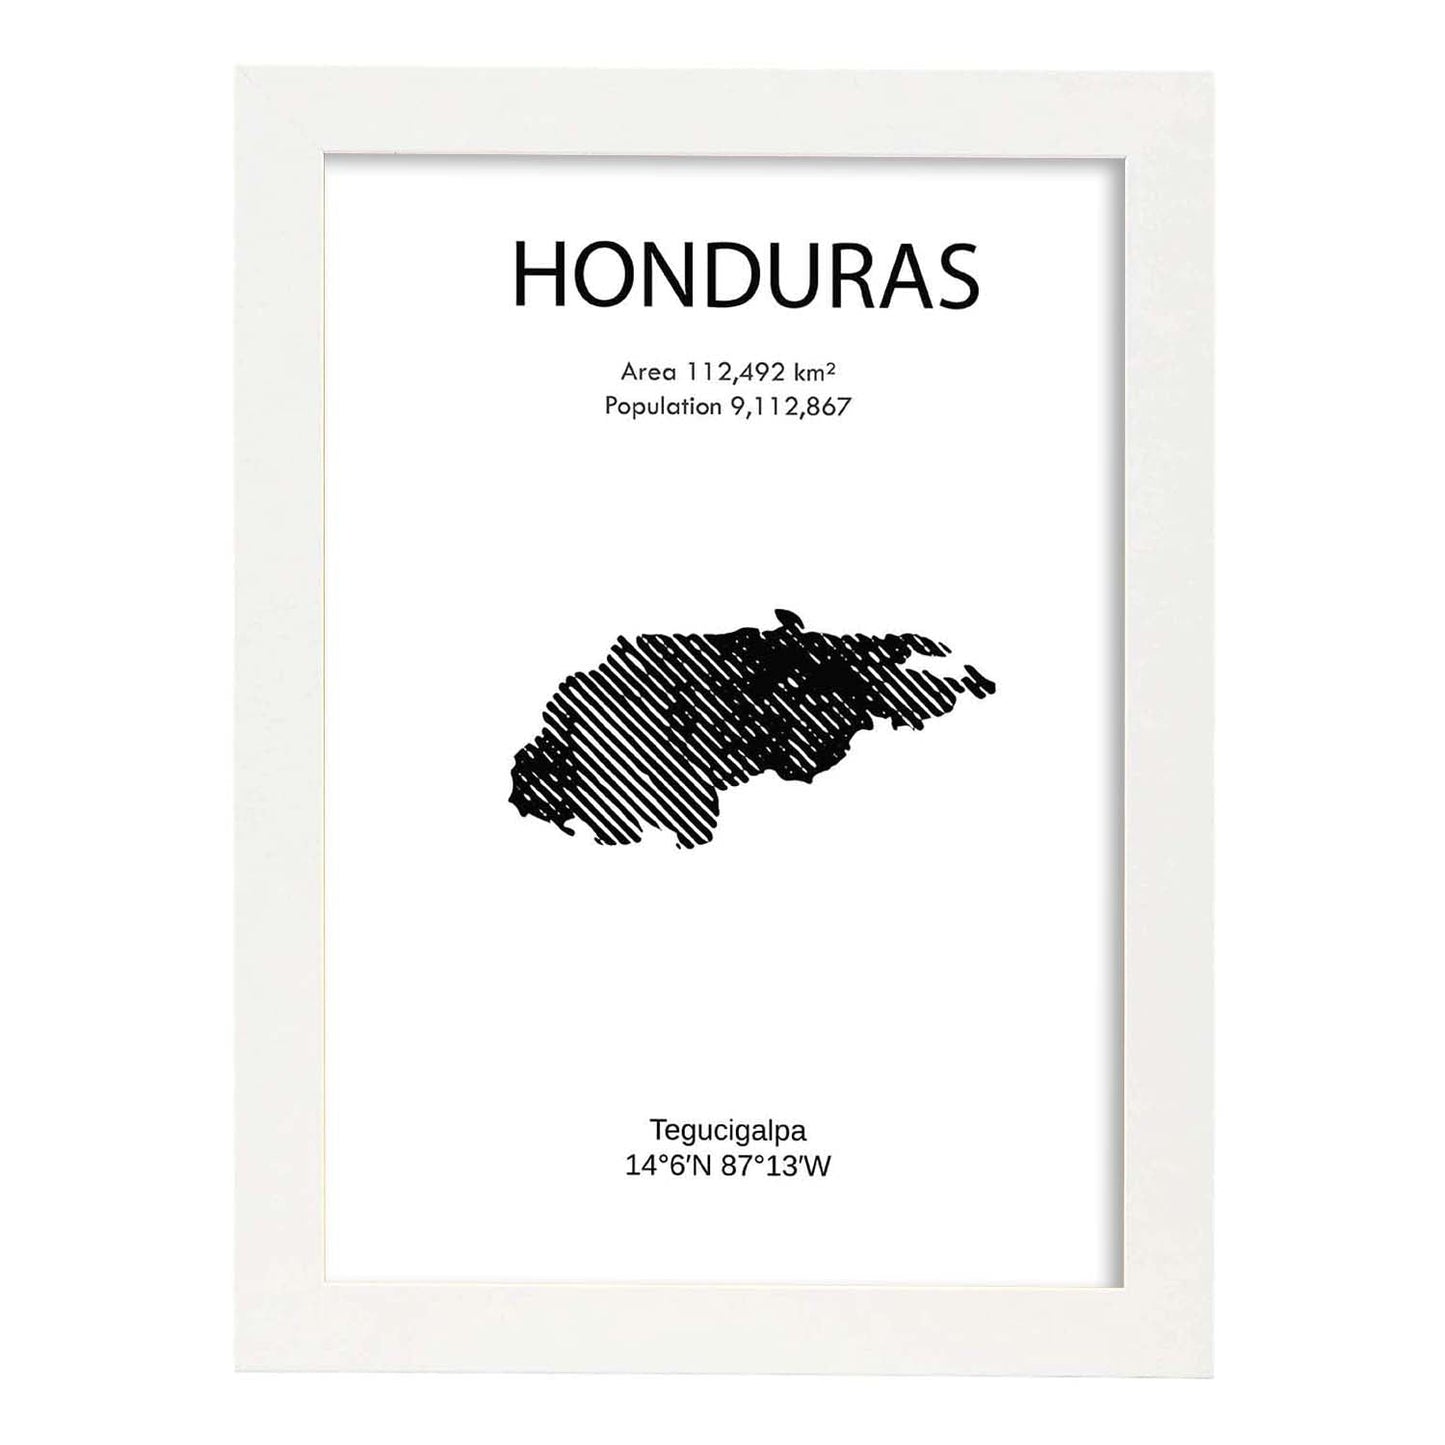 Poster de Honduras. Láminas de paises y continentes del mundo.-Artwork-Nacnic-A3-Marco Blanco-Nacnic Estudio SL